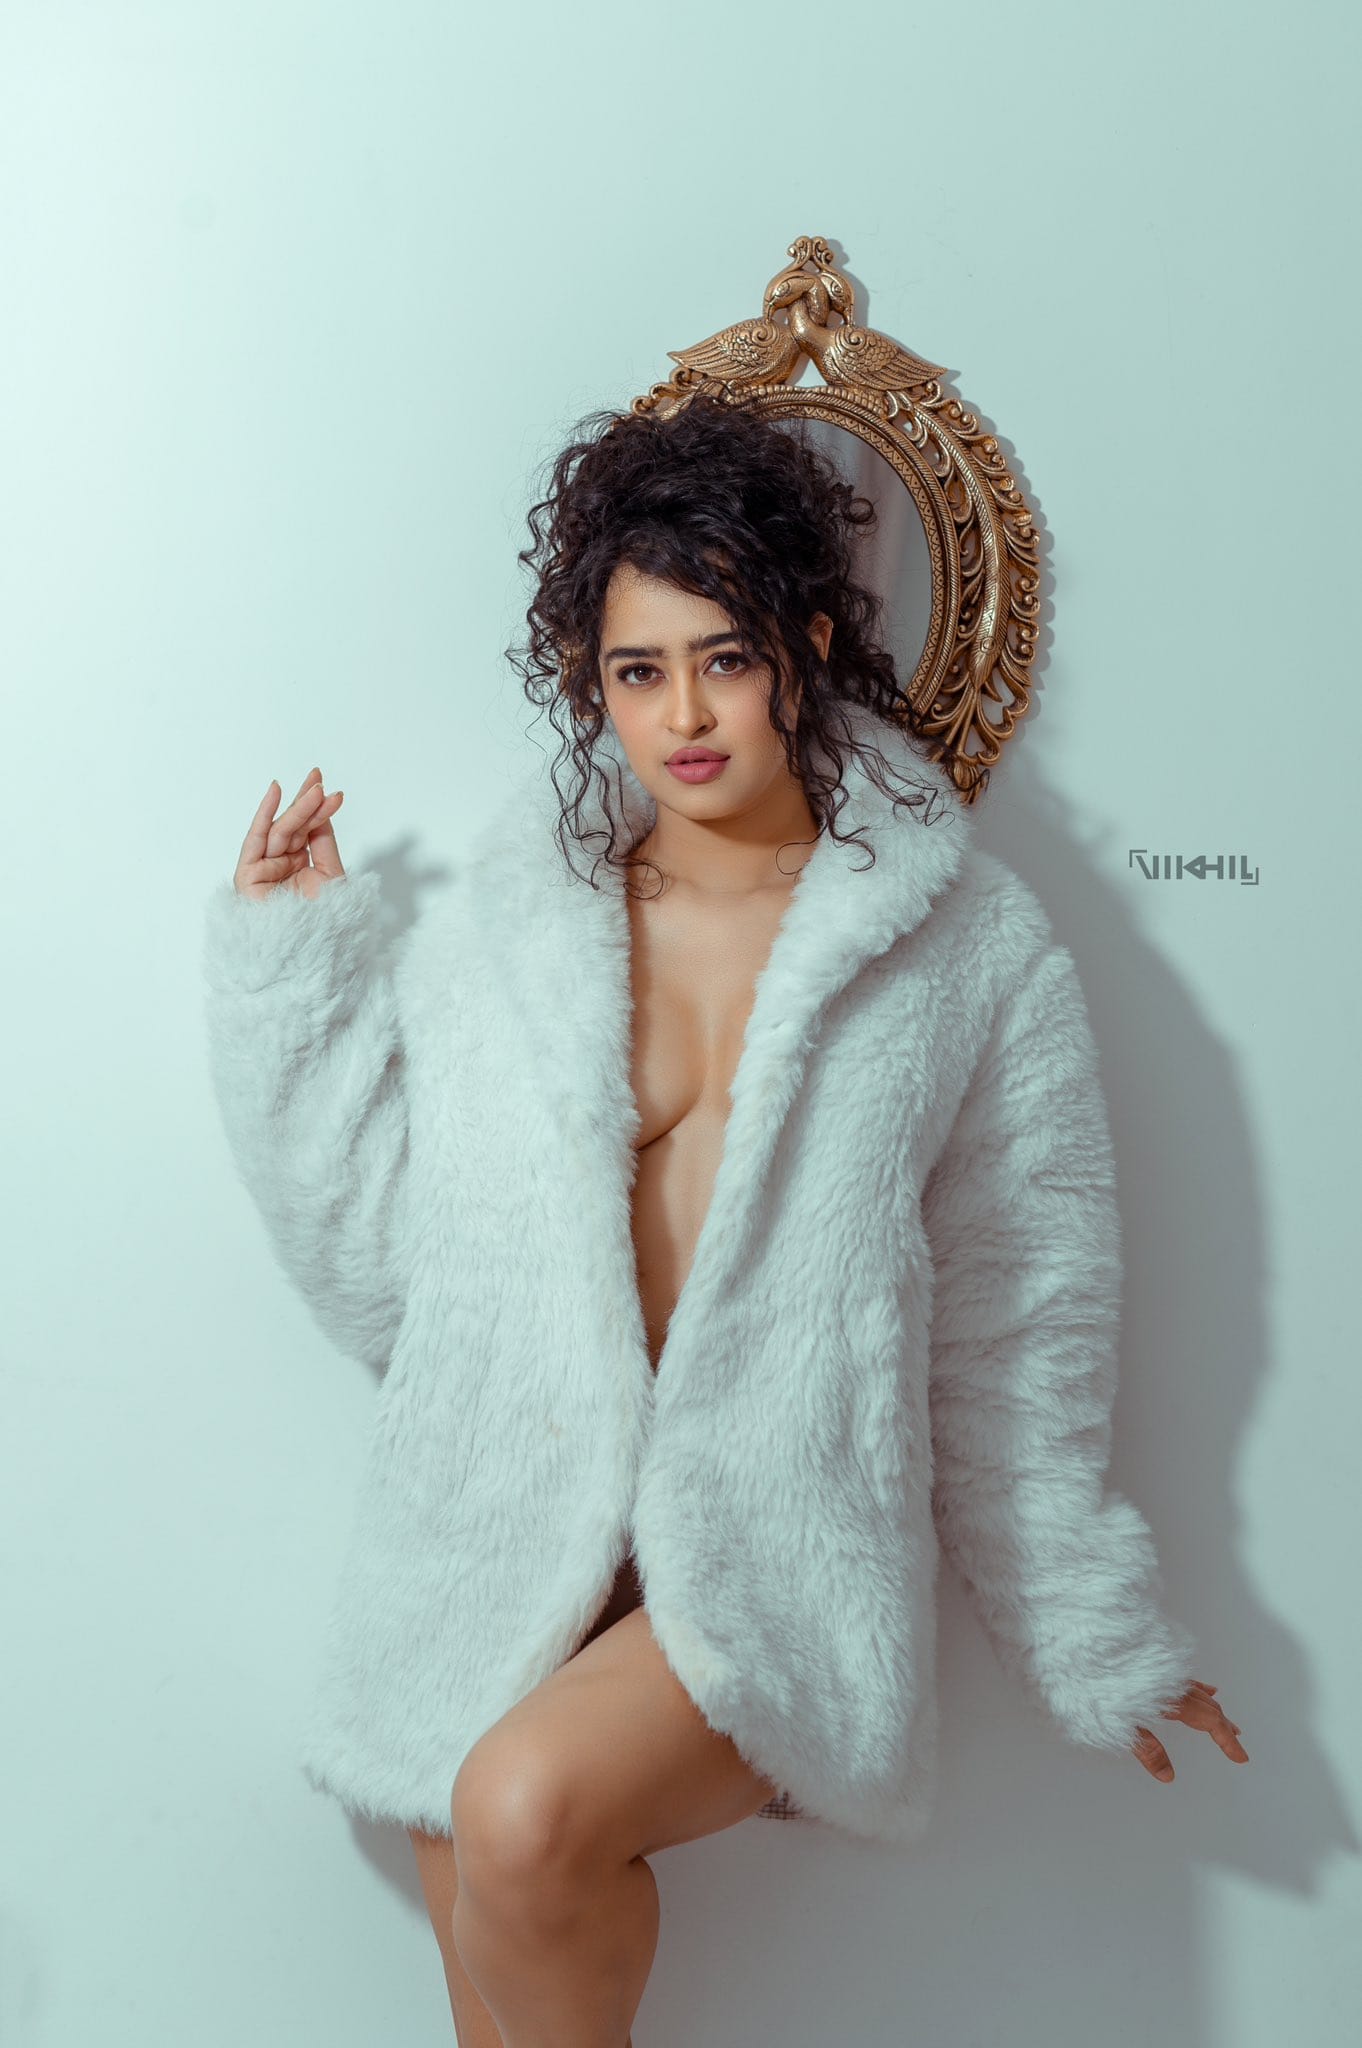 Apsara Rani looks sensuous as she poses during a photoshoot